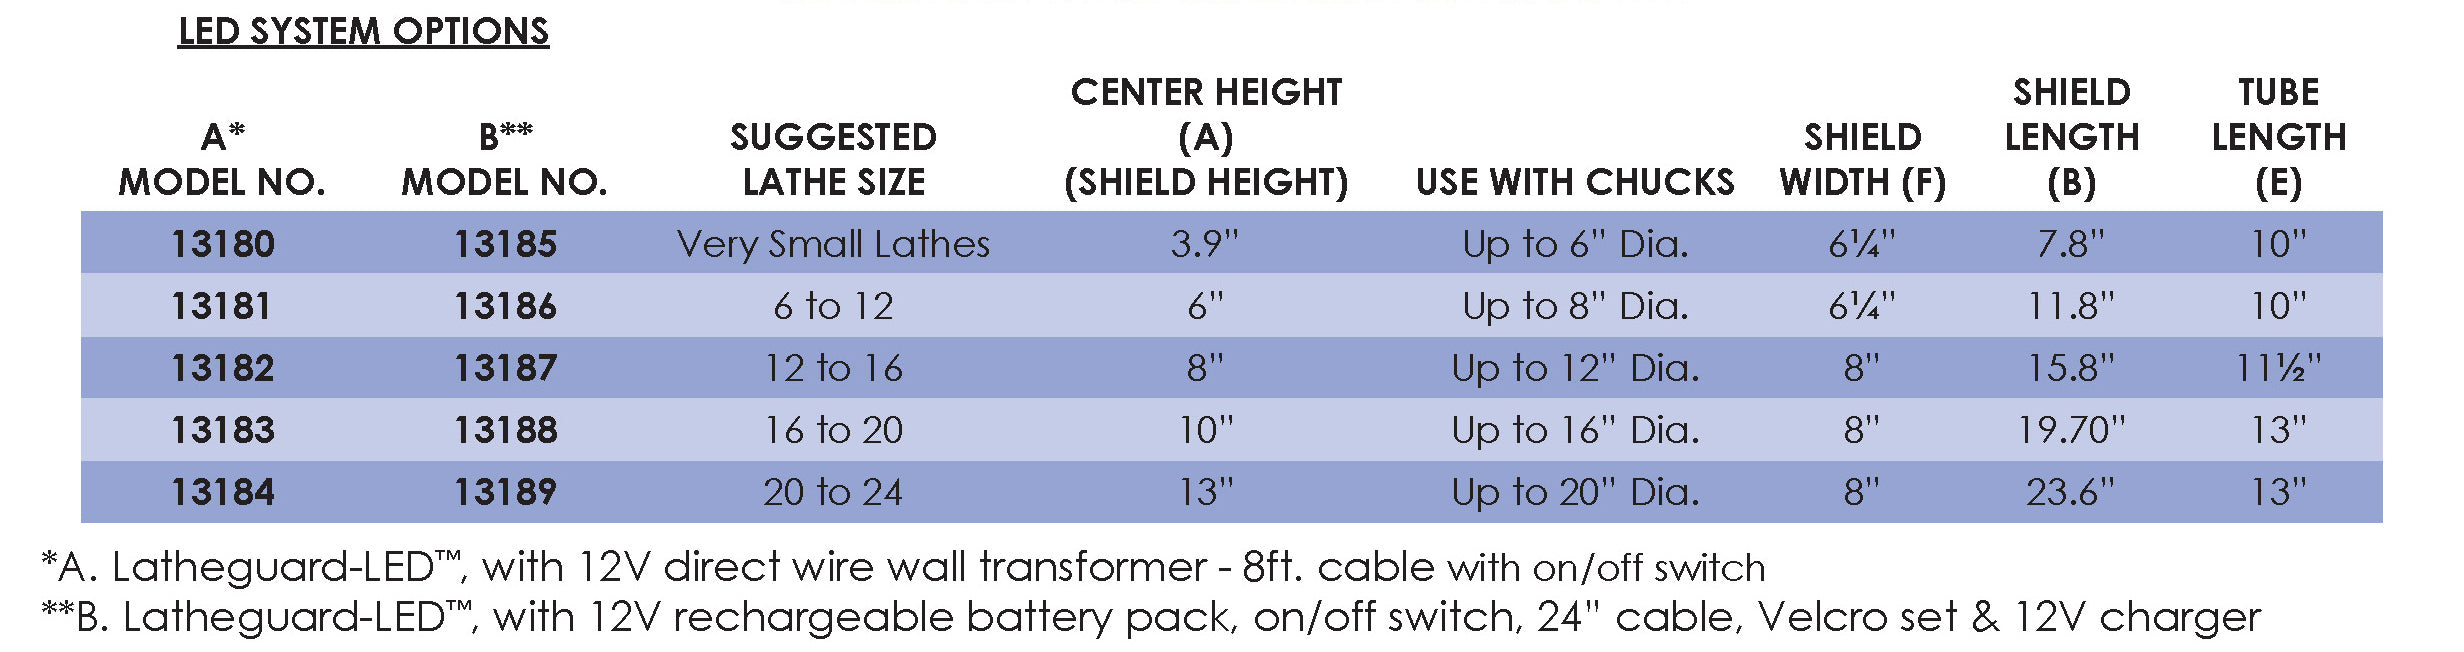 Latheguard-LED - Mini - 12V Rechargeable Battery Pack